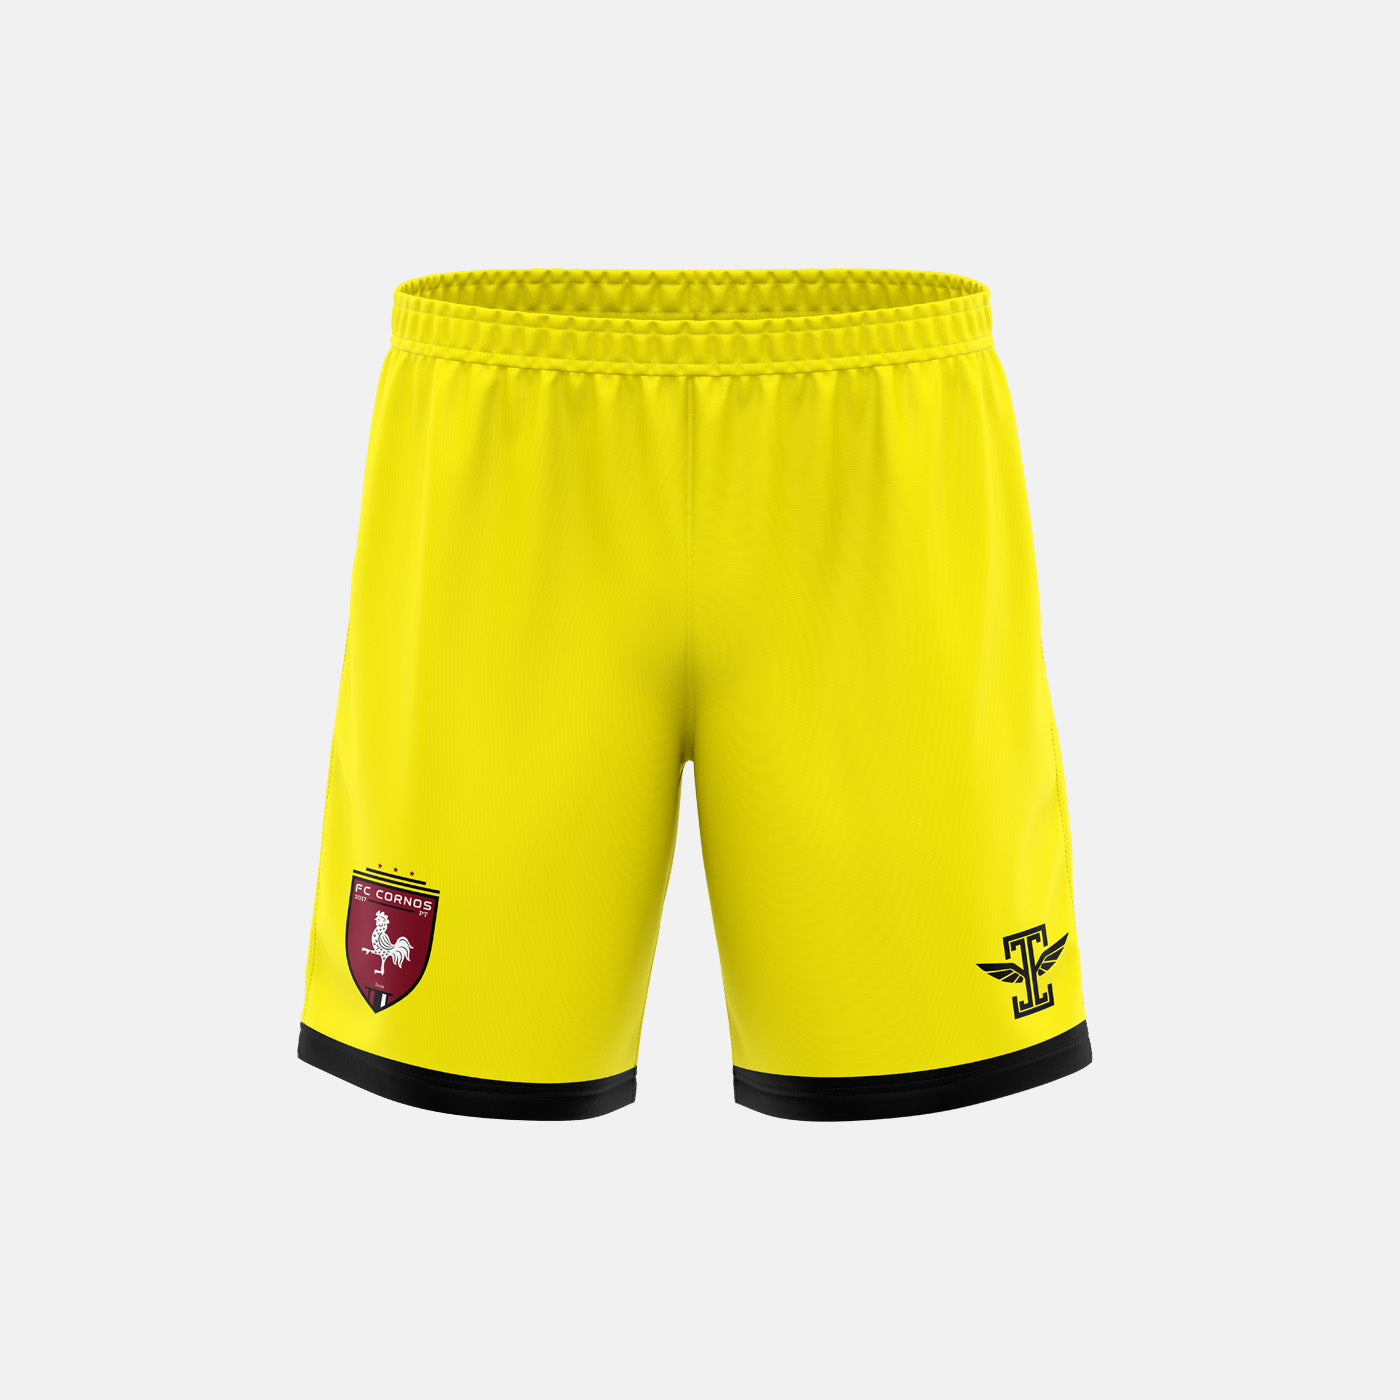 FC Cornos Yellow Shorts